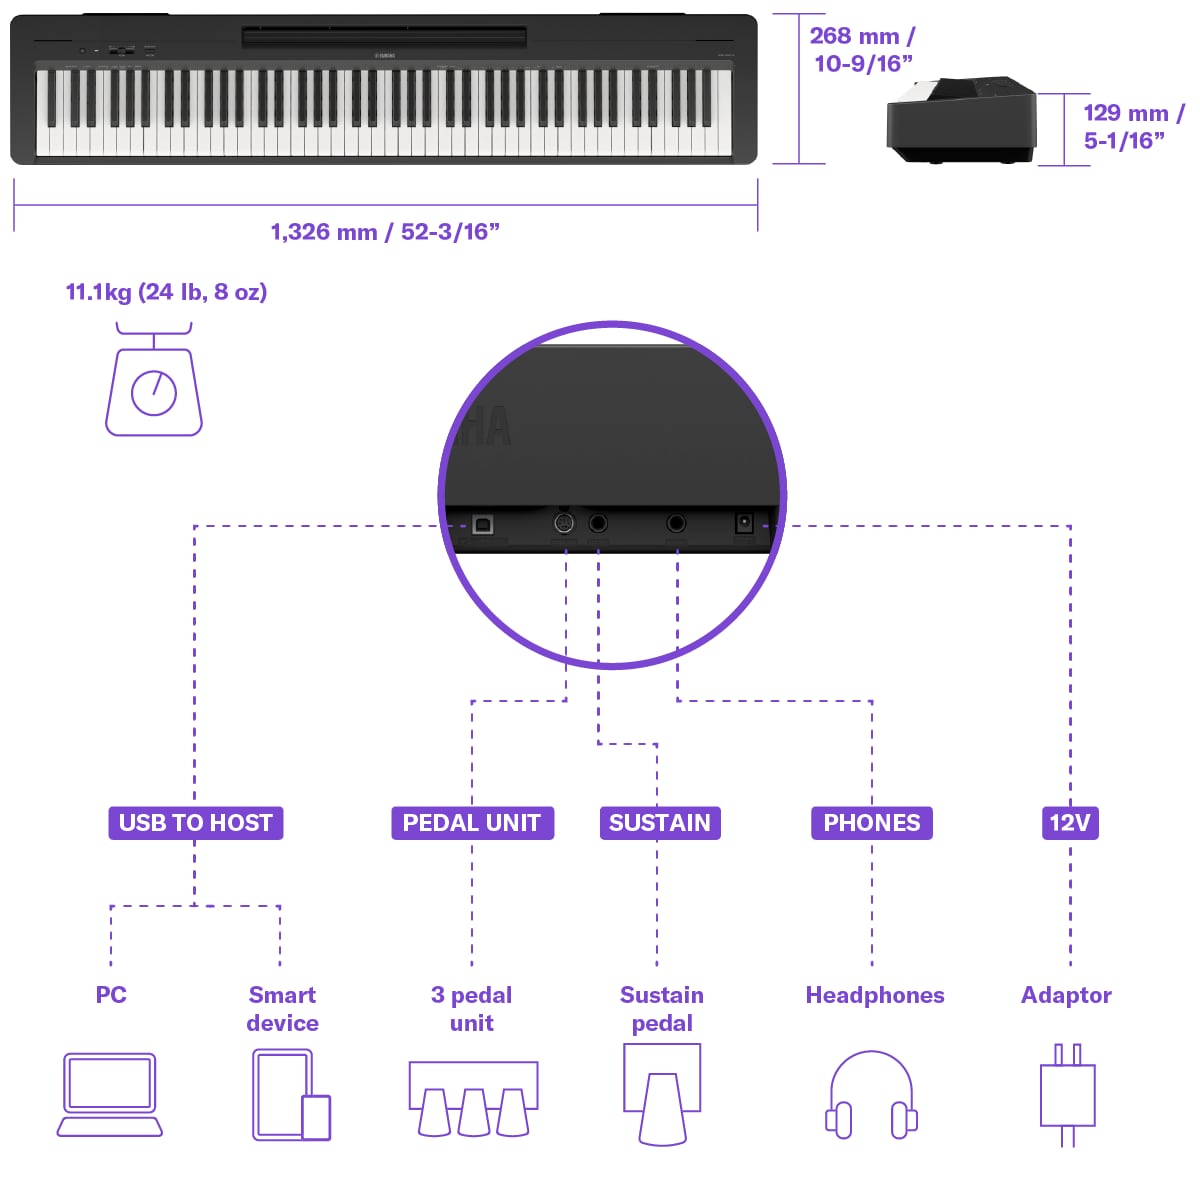 Yamaha P-145 88-Key Portable Digital Piano Kit with Furniture